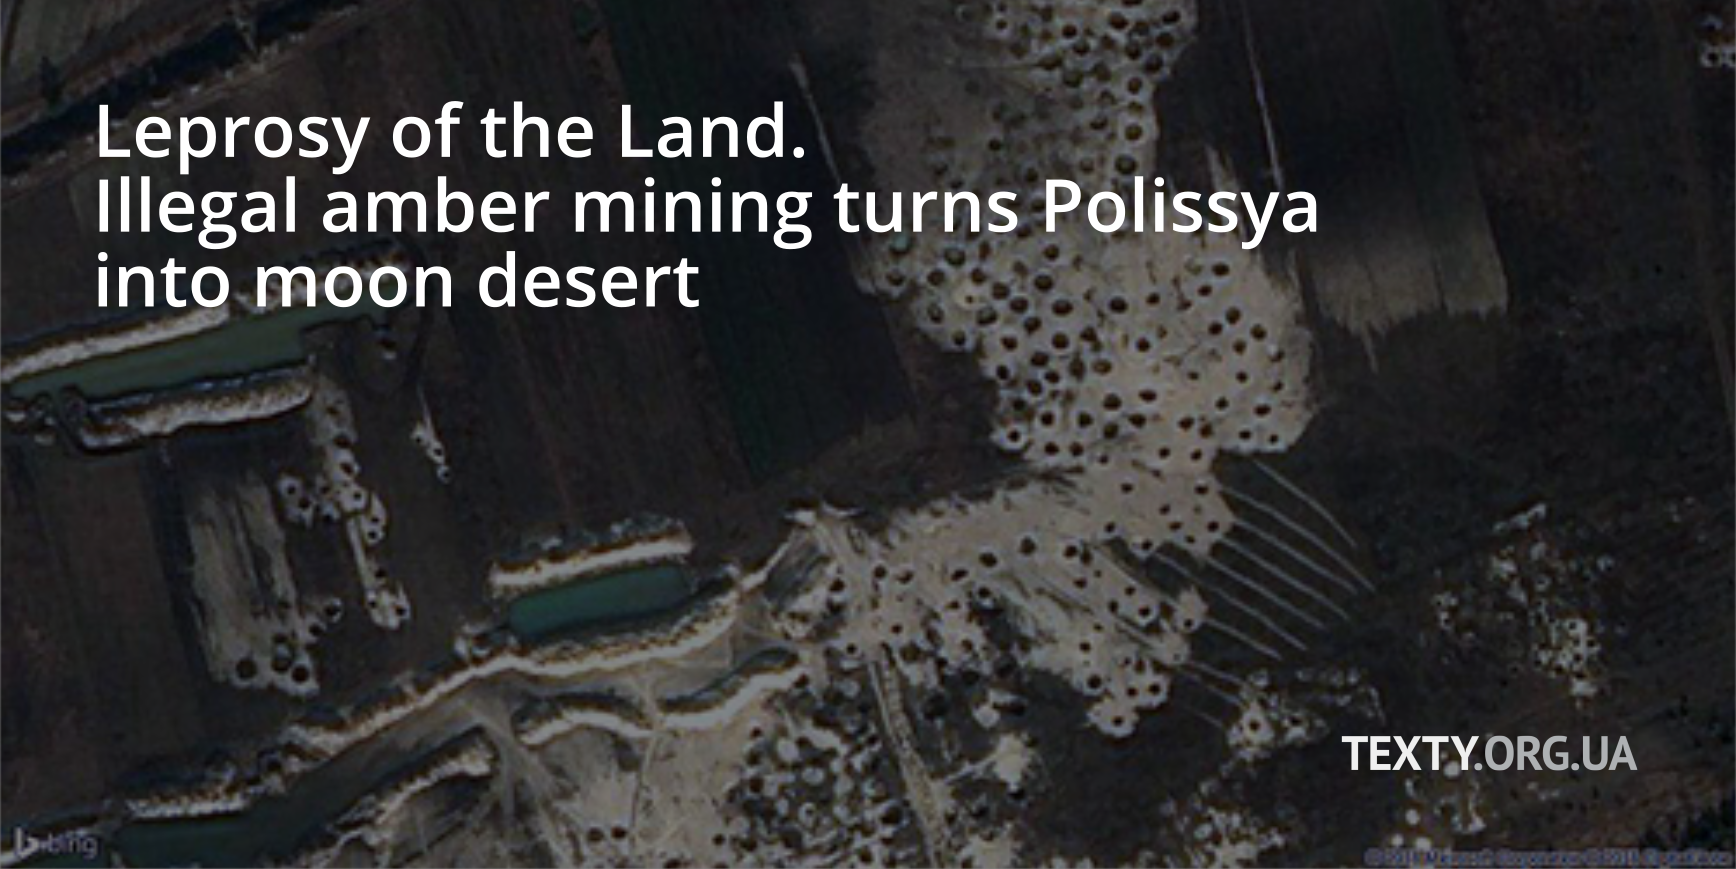 Leprosy of the Land. Illegal amber mining turns Polissya into moon desert